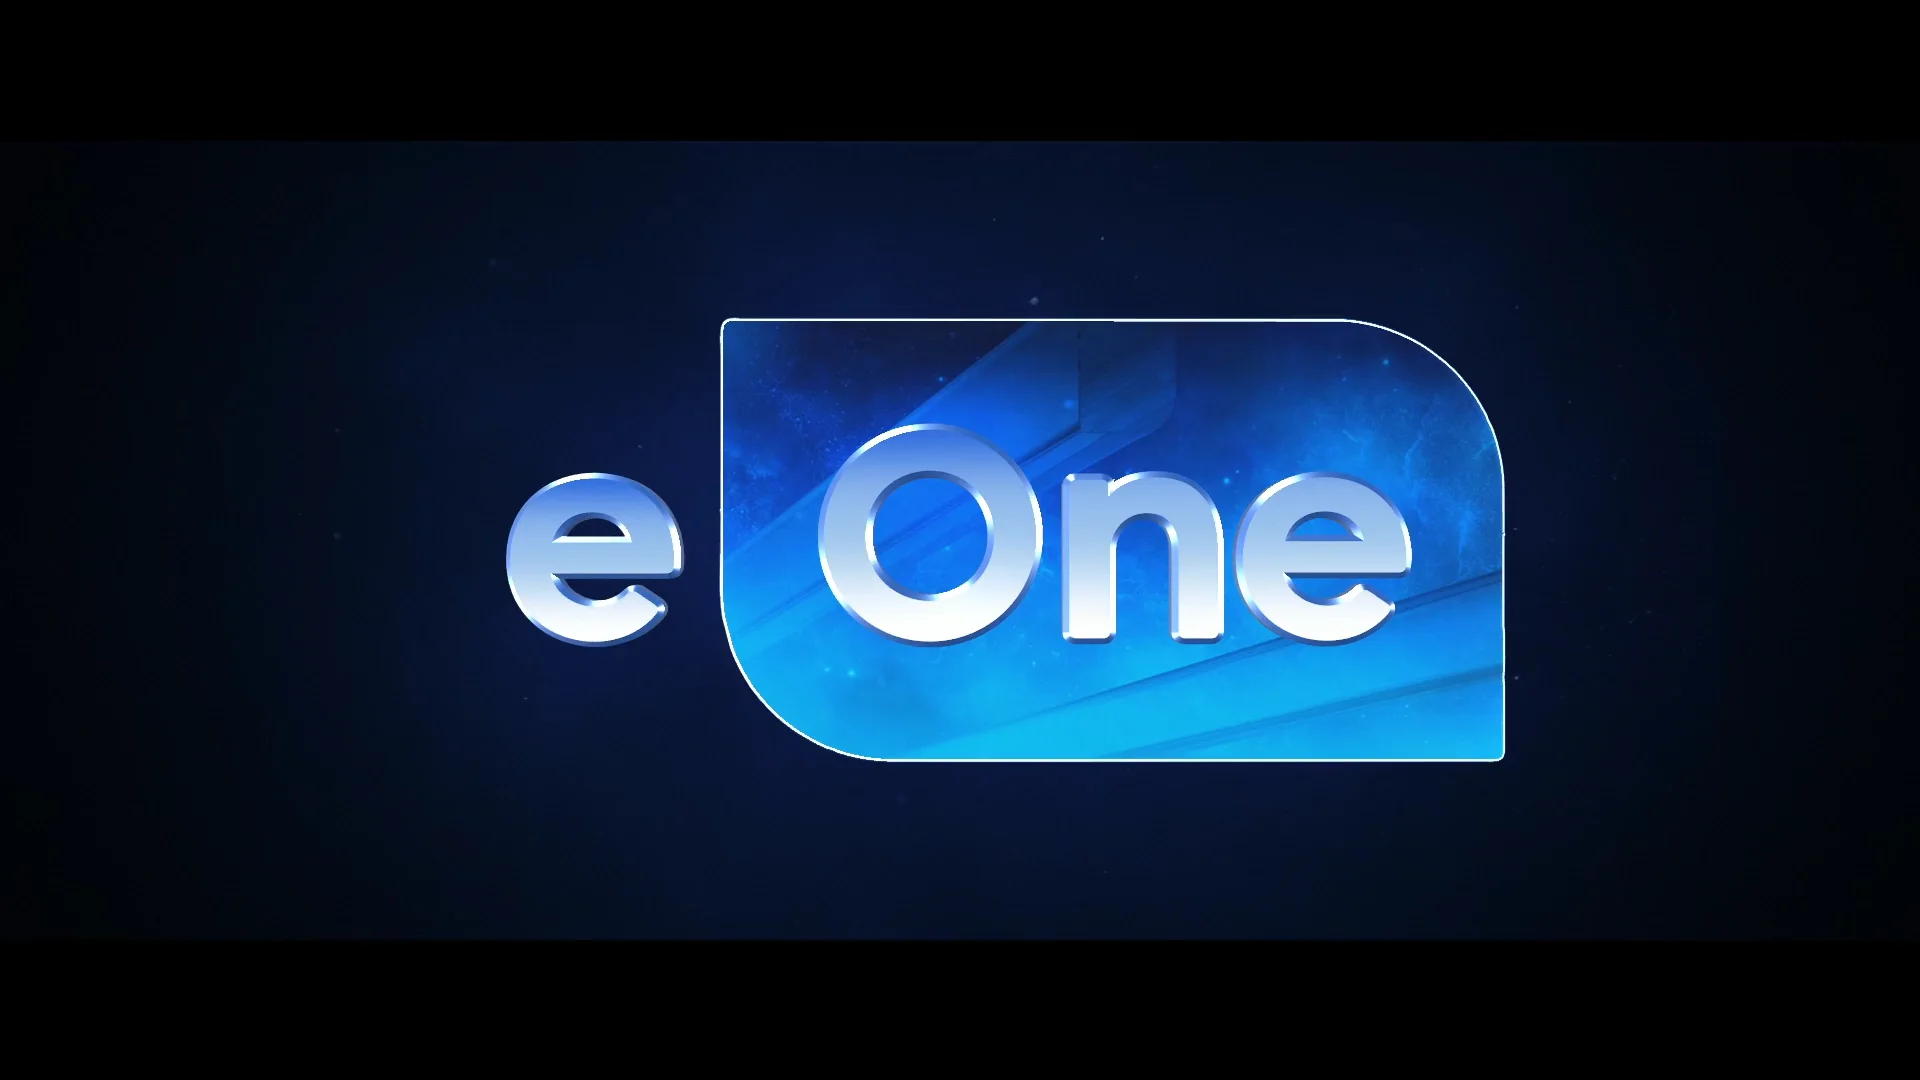 eOne TV